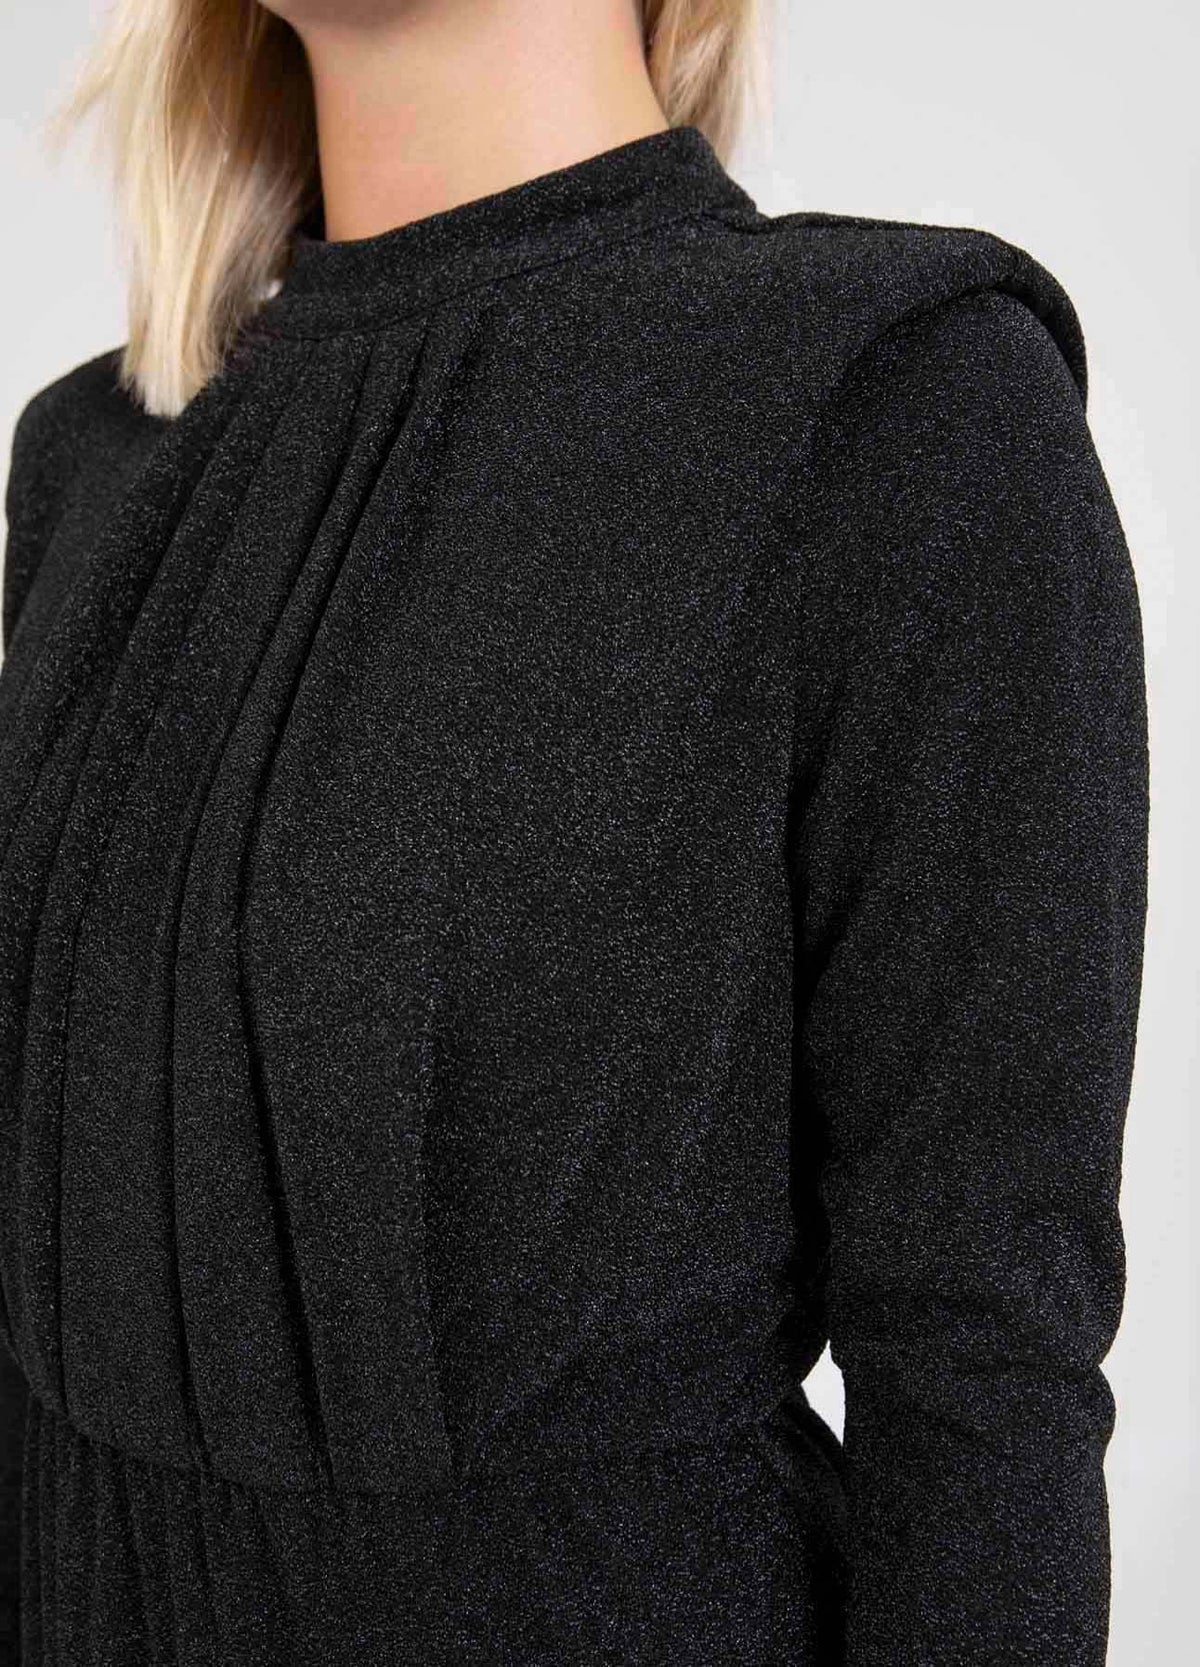 Coster Cophenhagen Shimmer Dress - Black